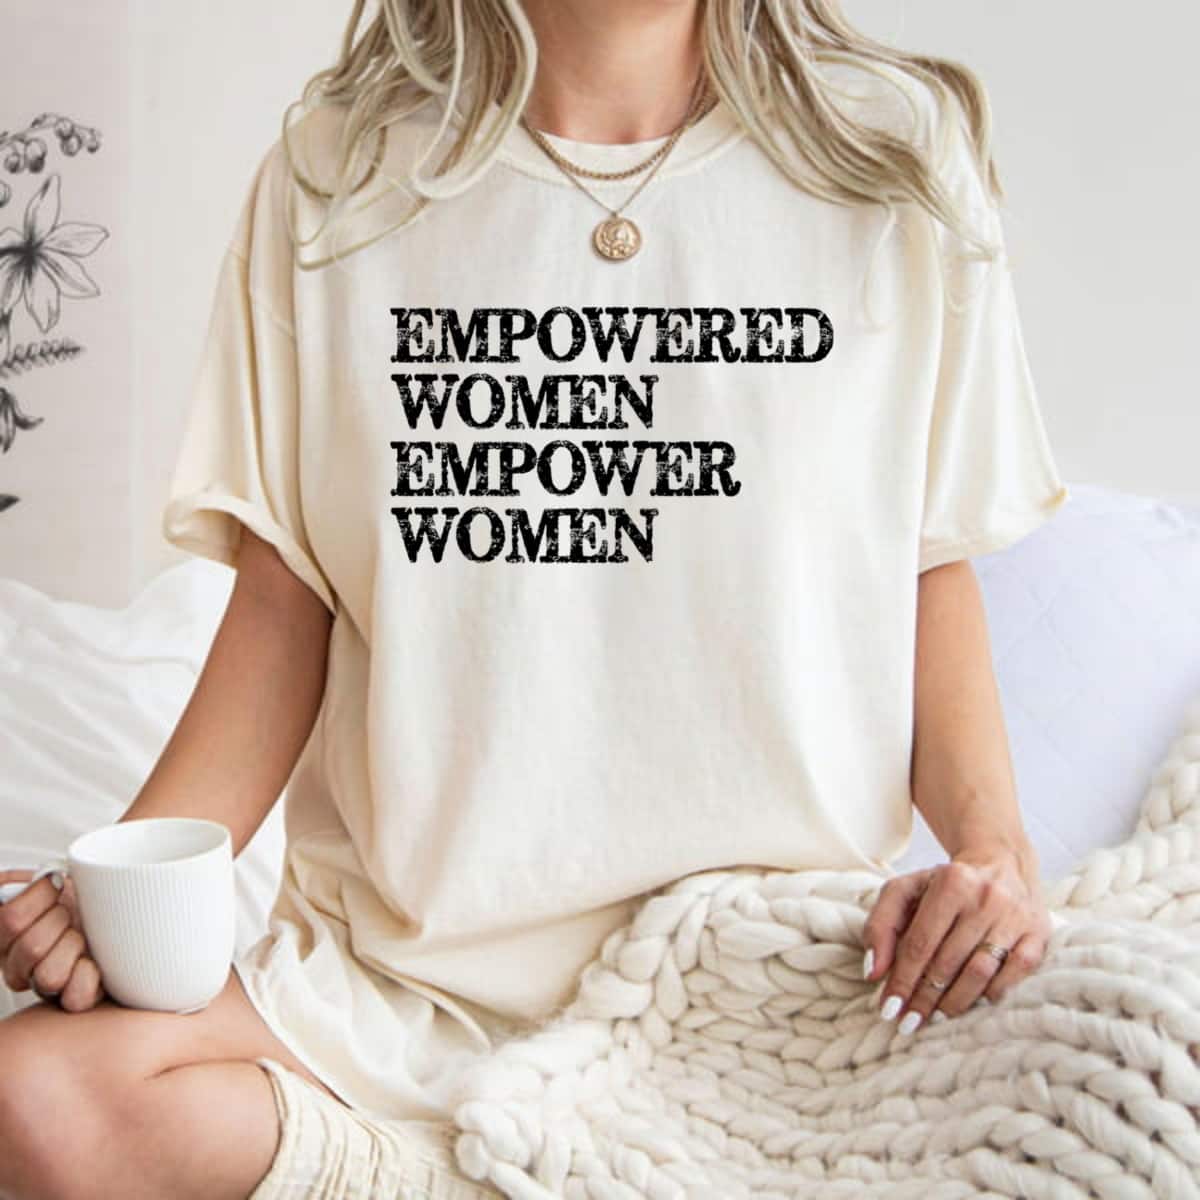 Strong Women Feminist Empowered Empower Women's Rights T-Shirt